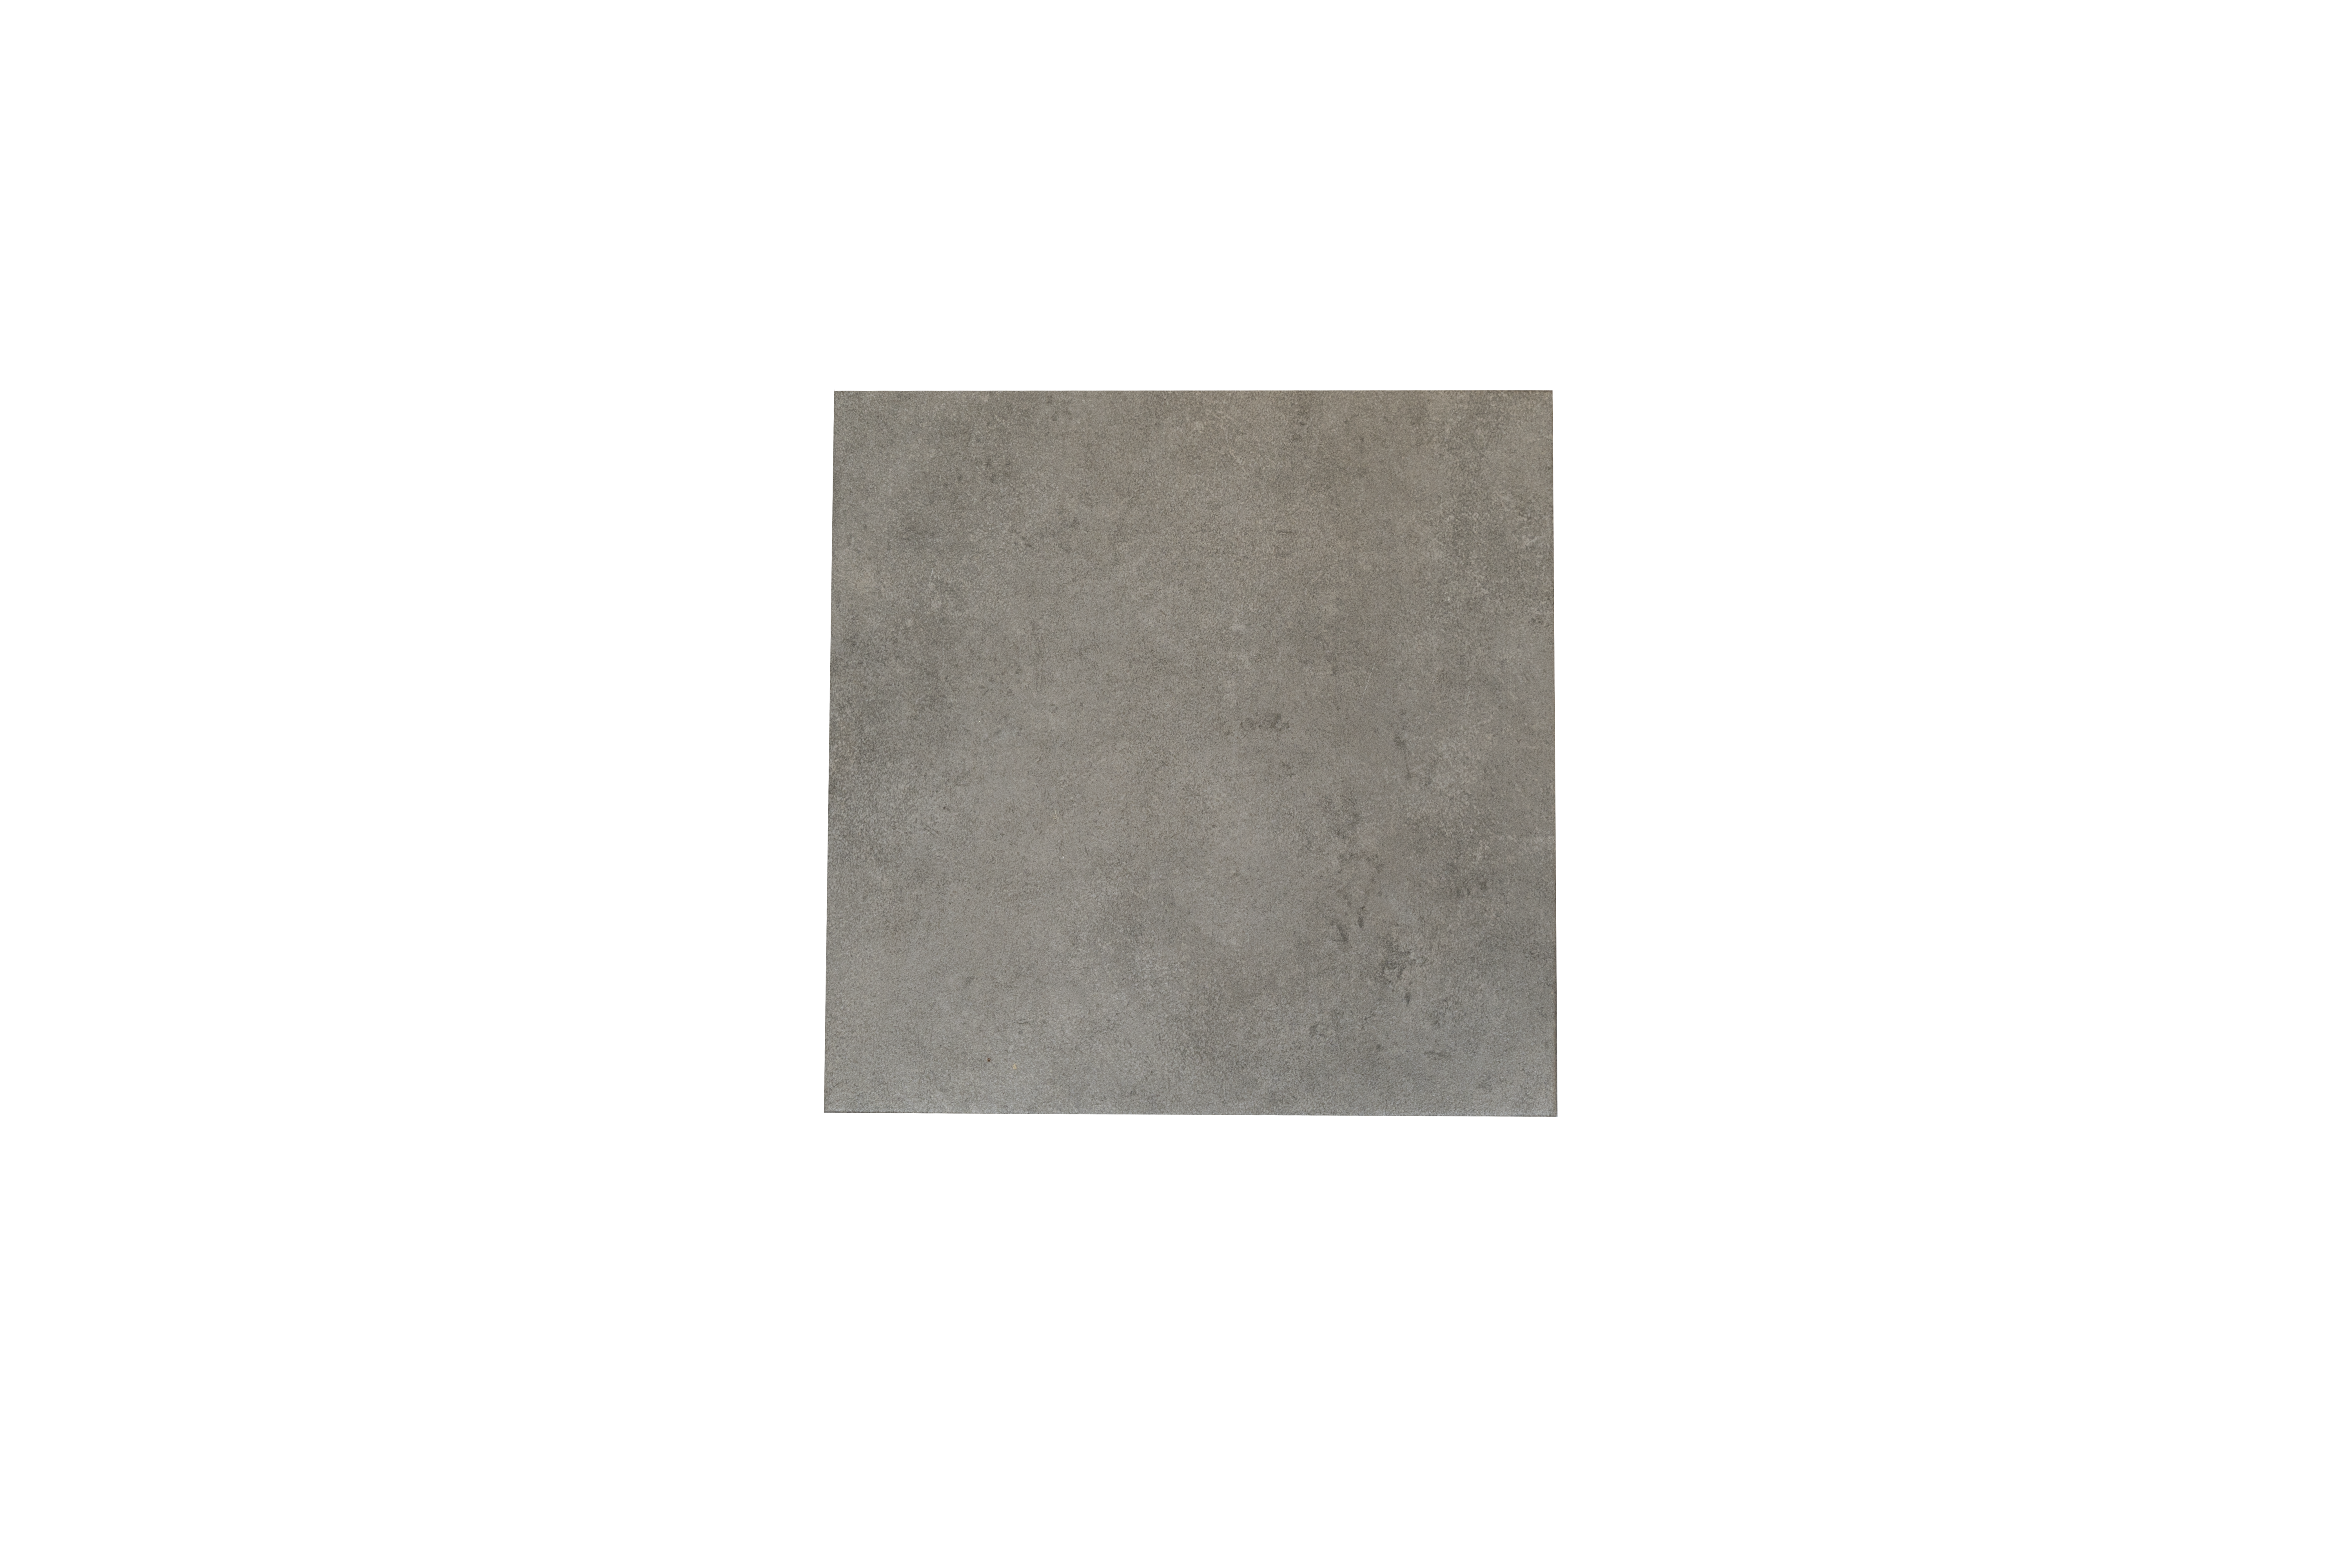 Urbanixx Gres Porto Schenkel Outdoor Grau matt 31x15,2x5,2 cm  